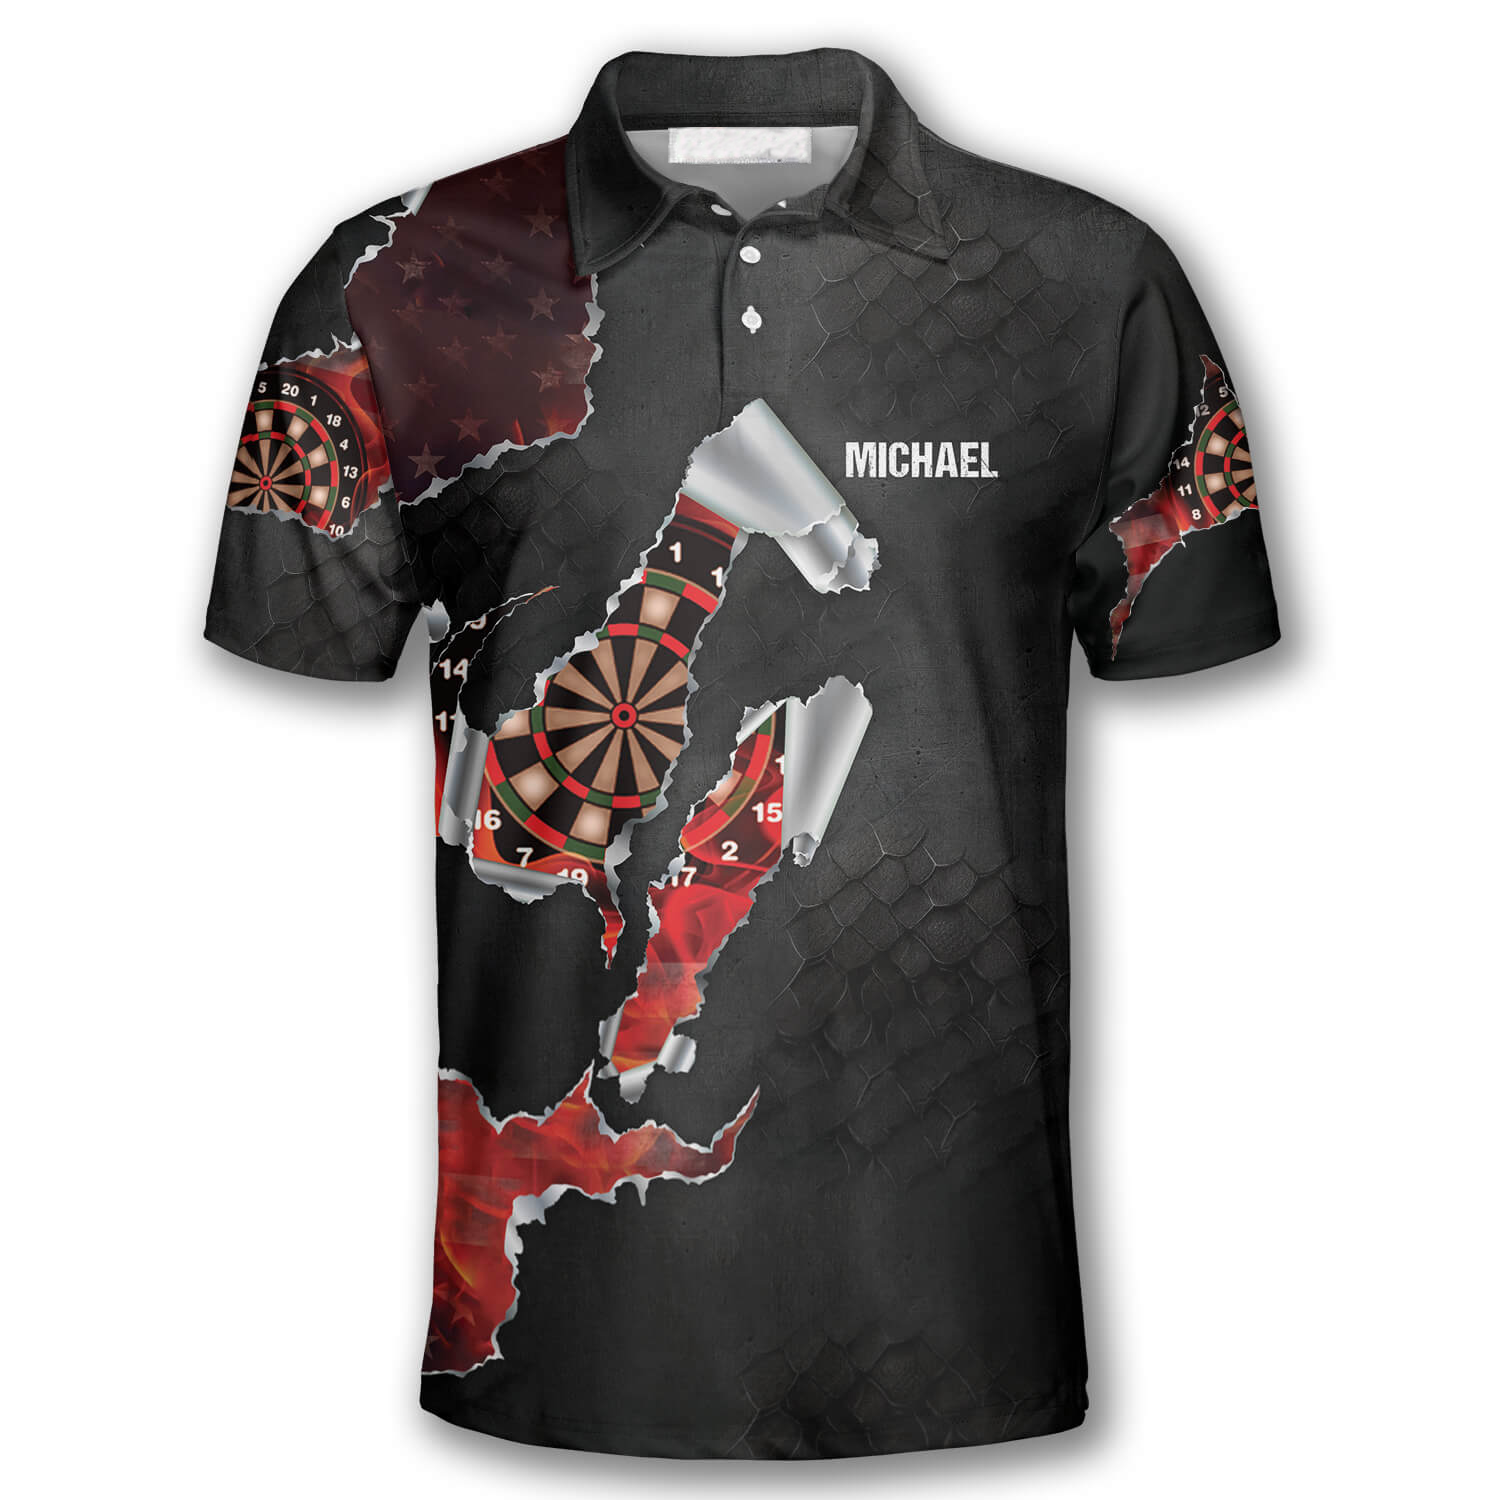 Black Patriots Dragon Scales Custom Darts Polo Shirts/ Coolest Dart Player